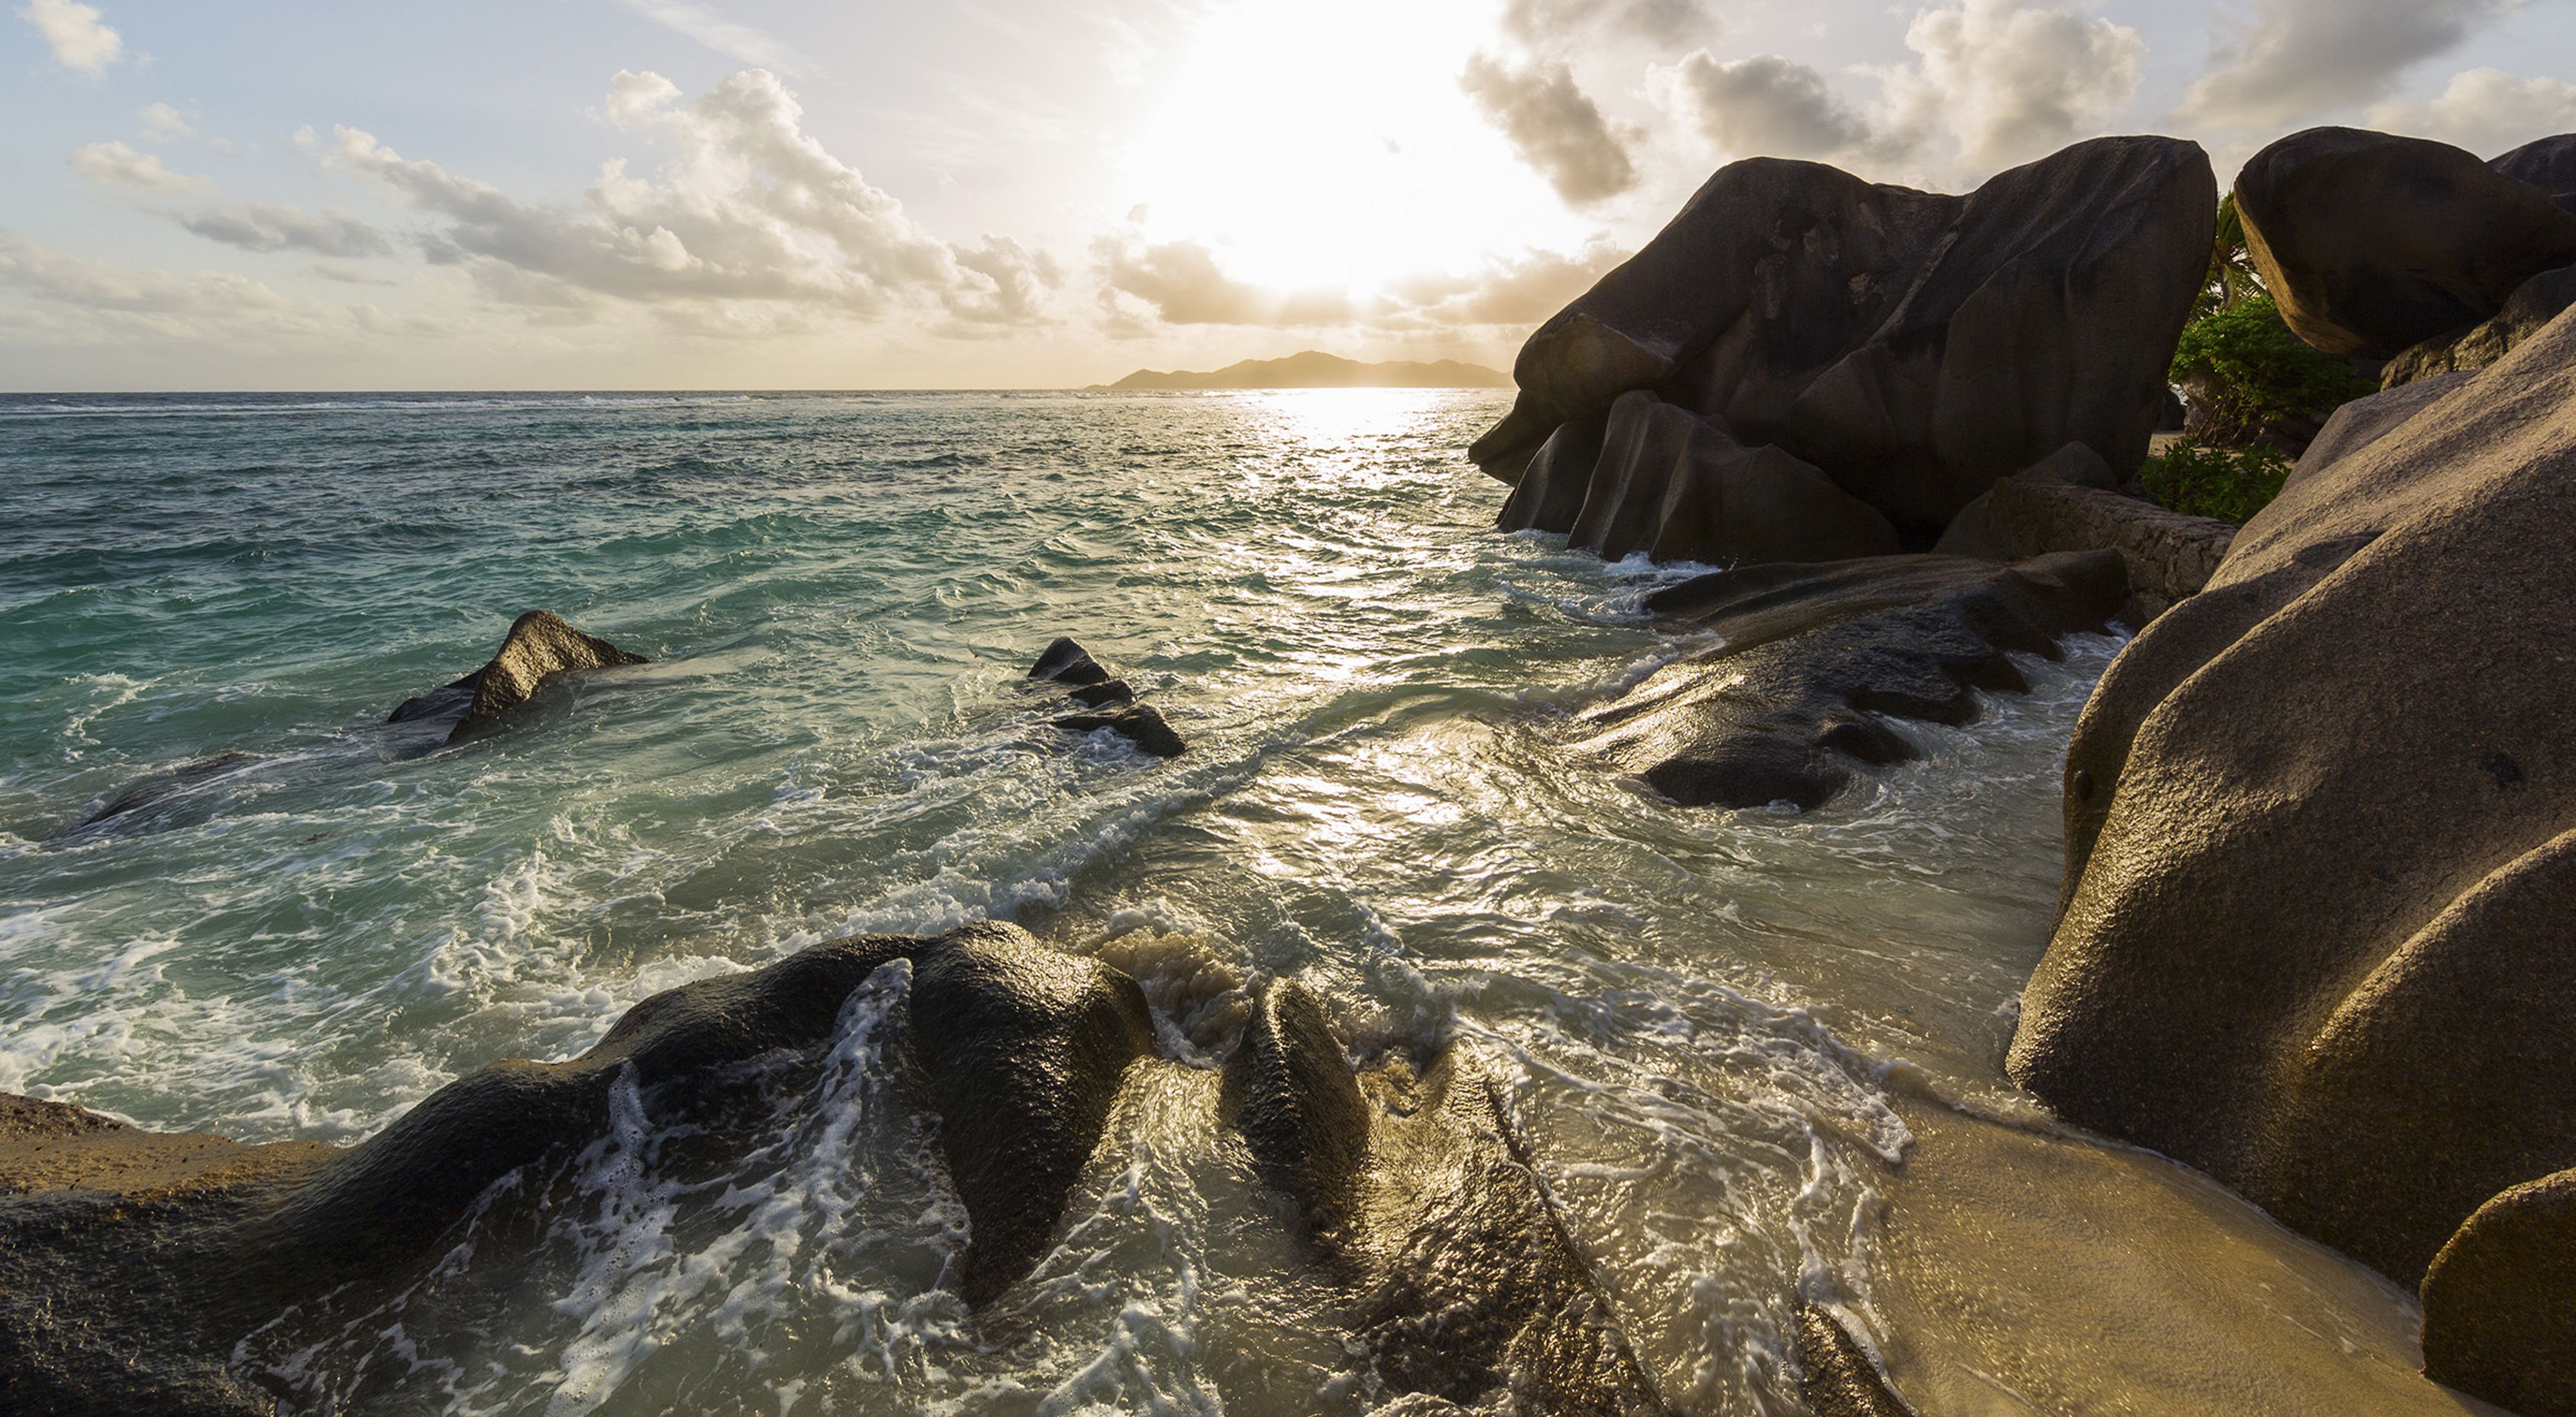 Granite boulders front turquoise ocean waves, under a blue, sunlit sky.